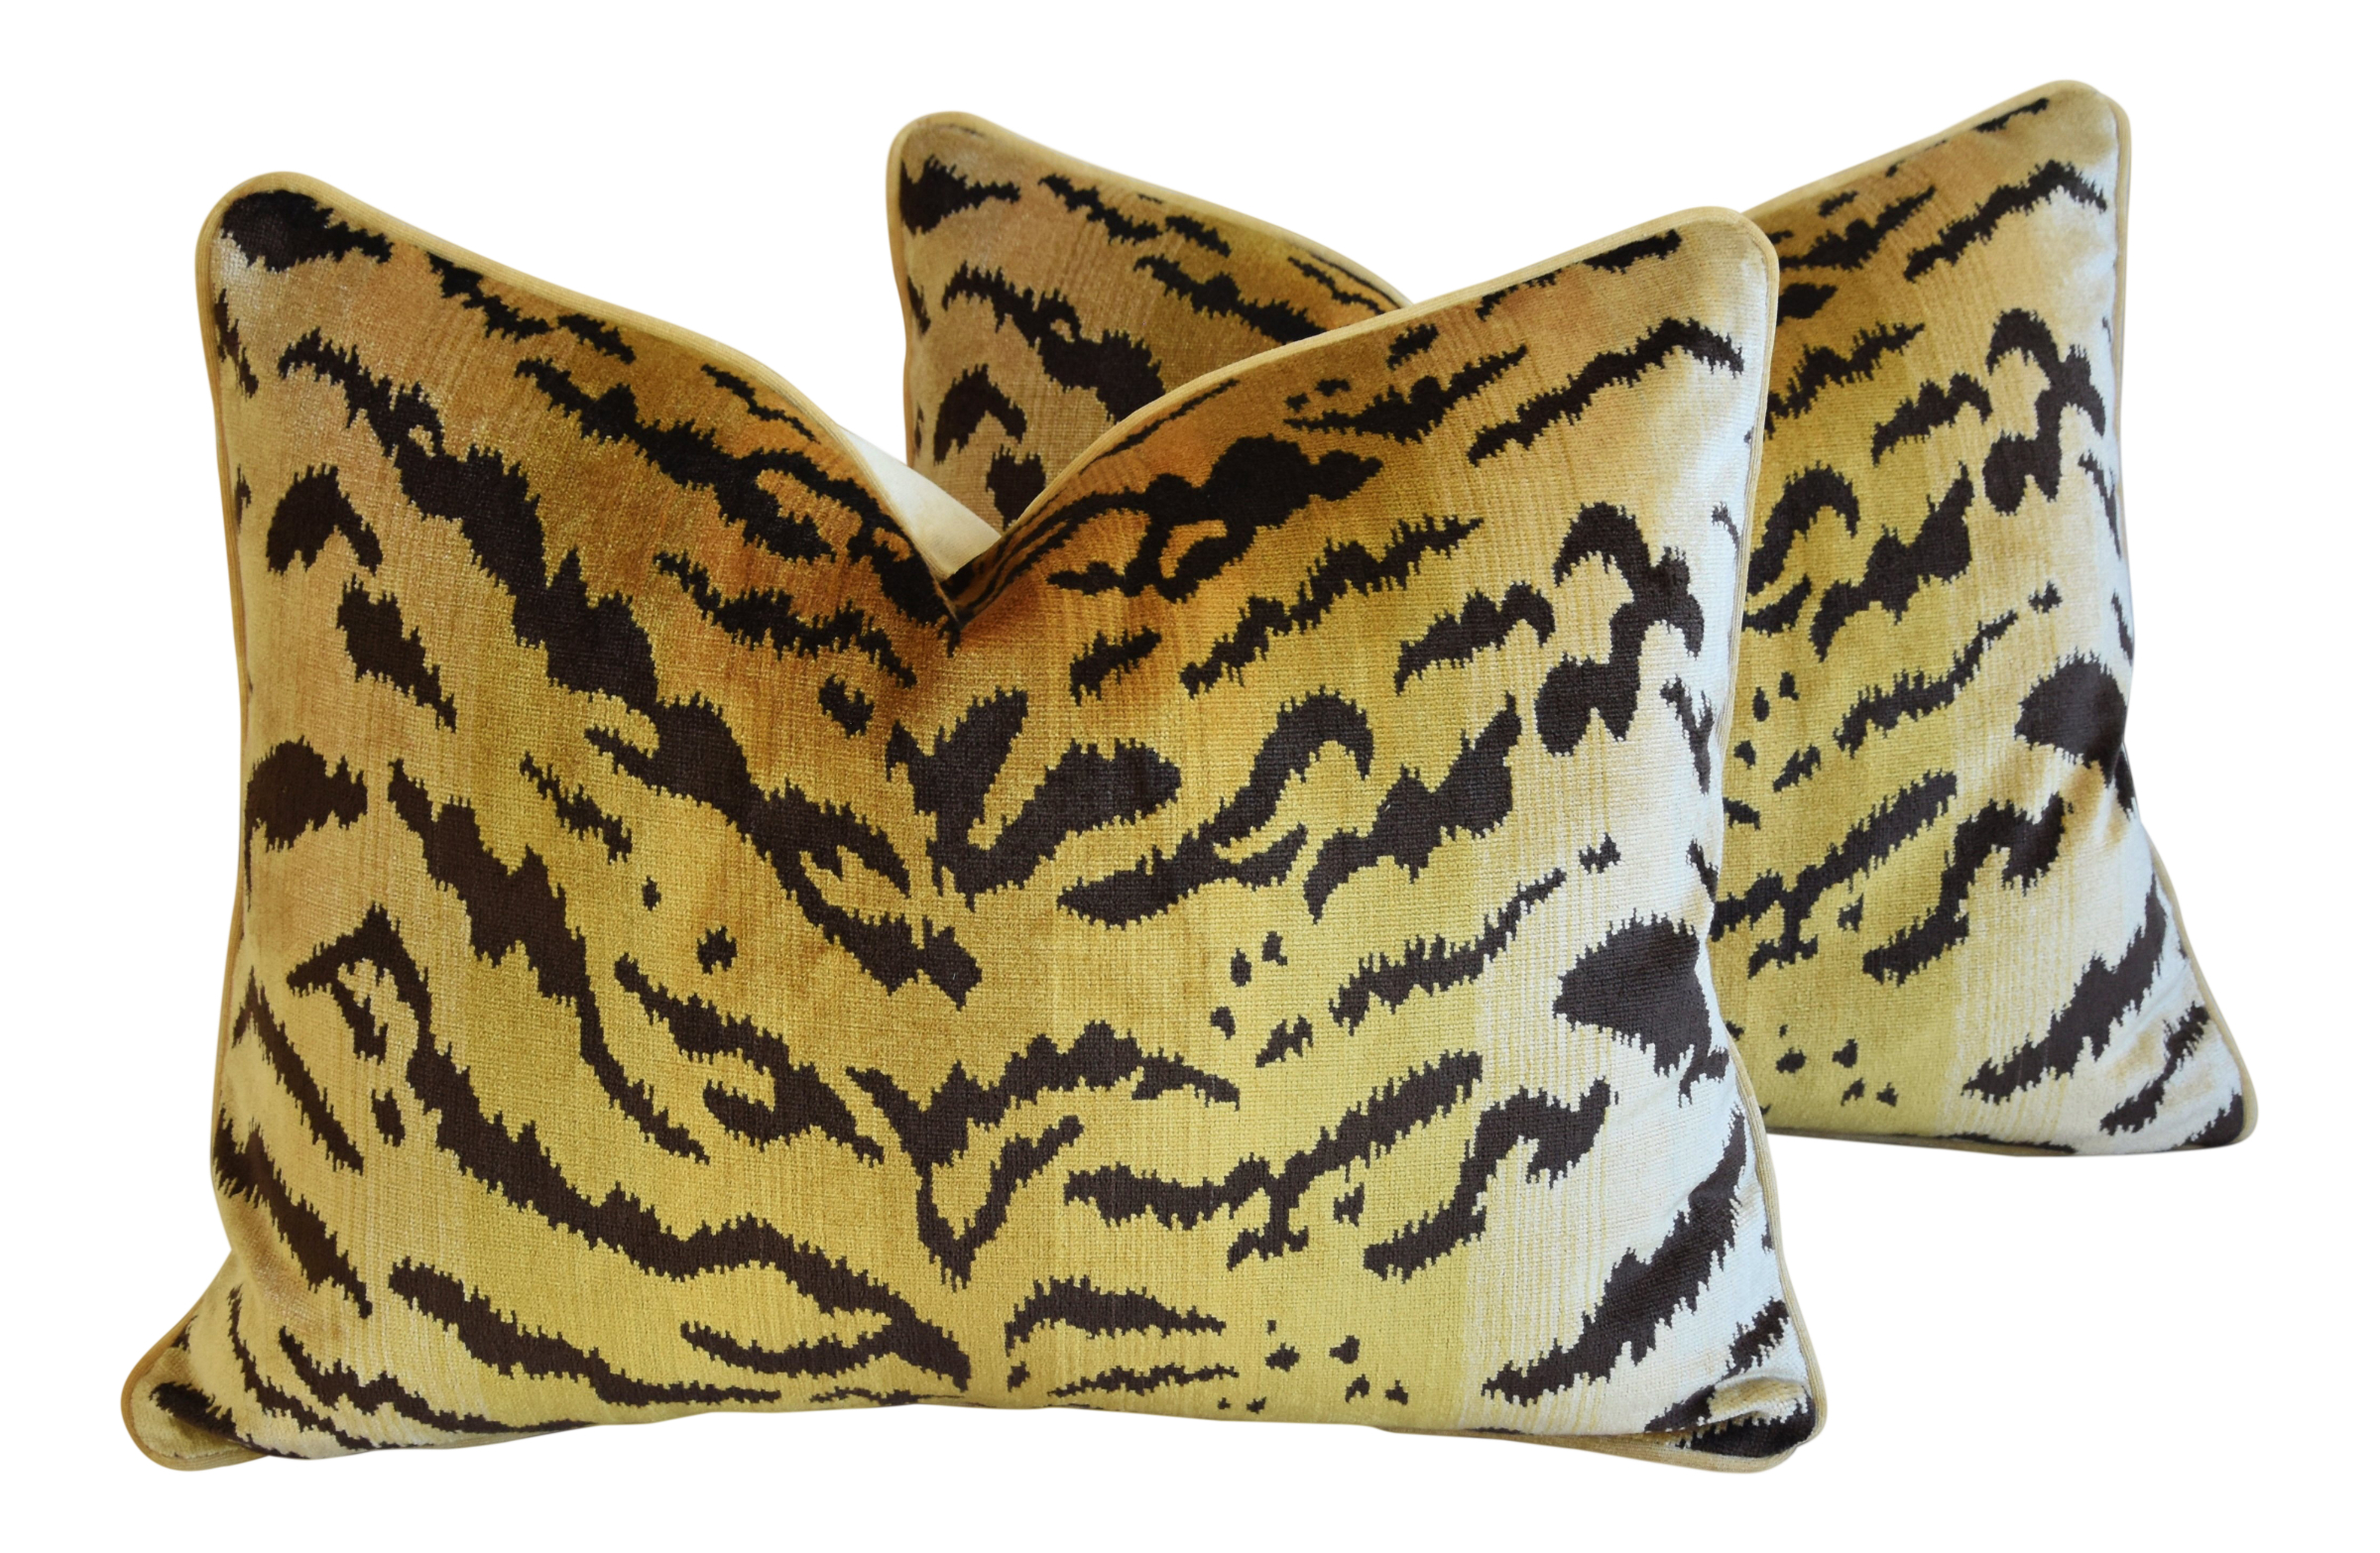 Scalamandre Le Tigre Tiger Pillows, Pr~P77694643